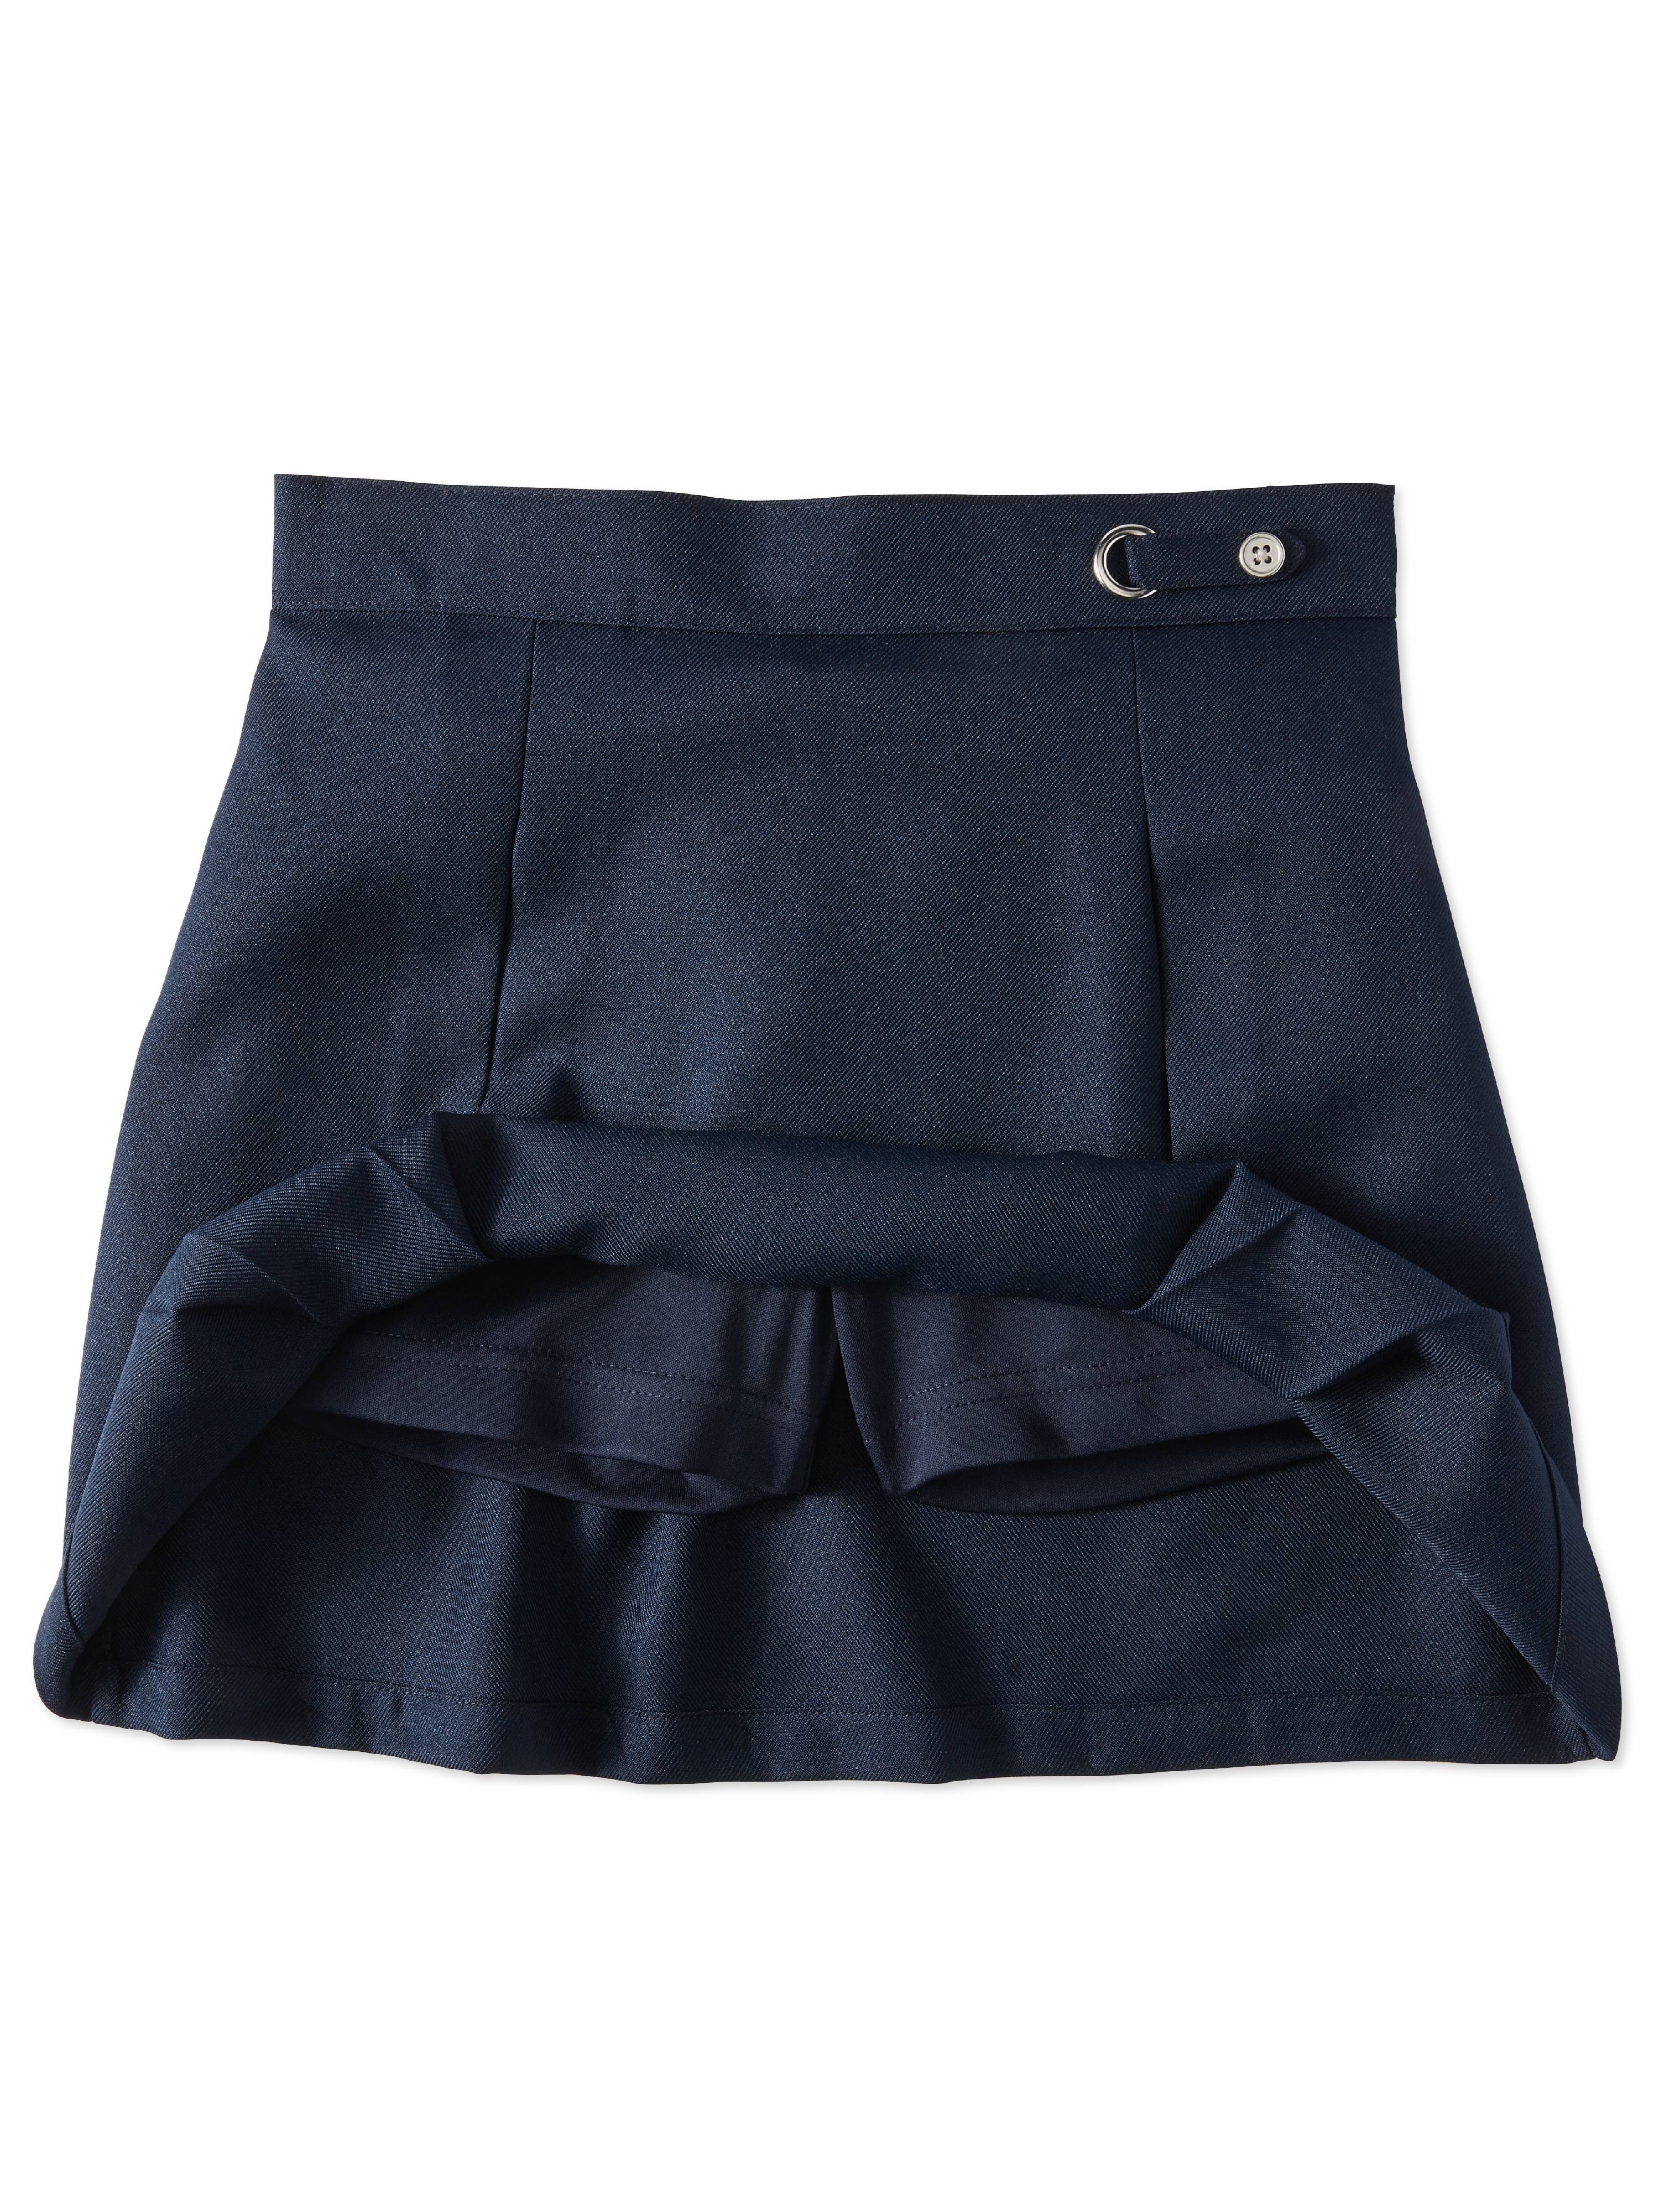 Wonder Nation Girls School Uniform Button Side Tab Scooter Skirt, Sizes 4-16 & Plus - image 4 of 4